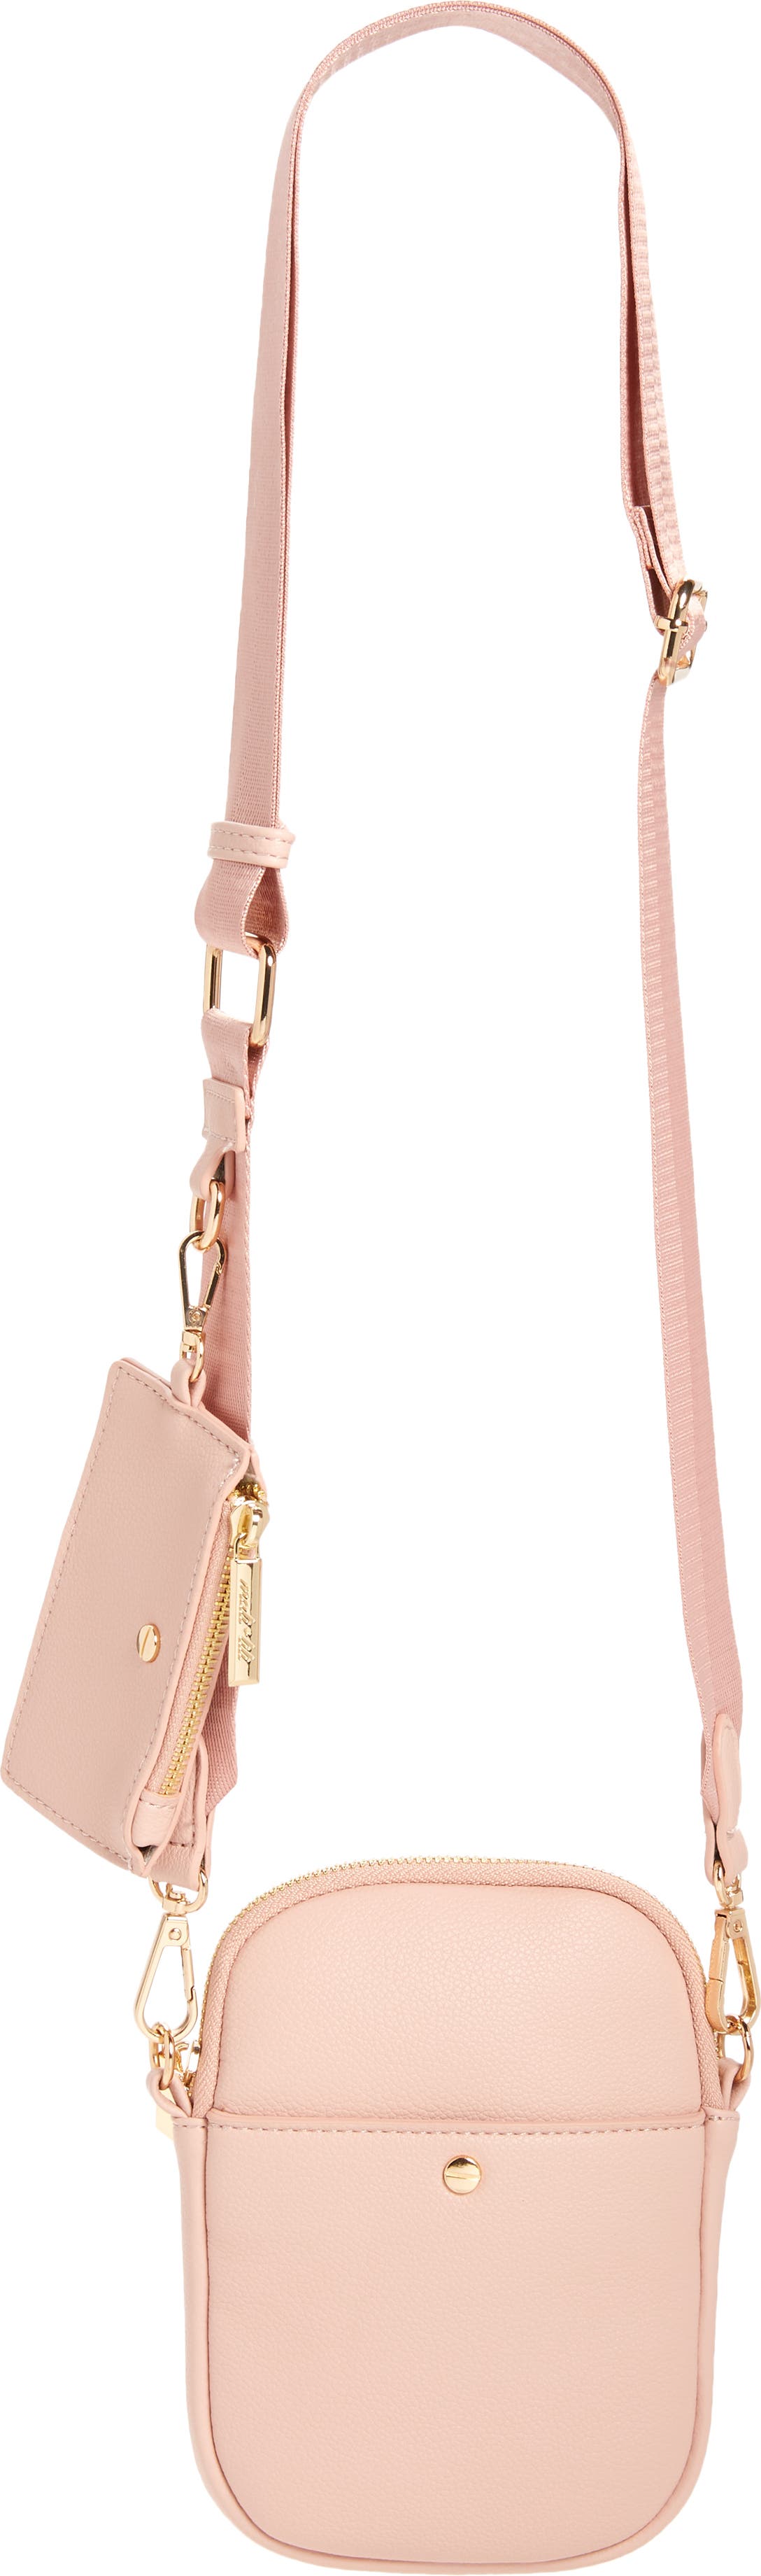 Dream Room Women Fashion Ring Leather Messenger Bag Pink Crossbody Bags 